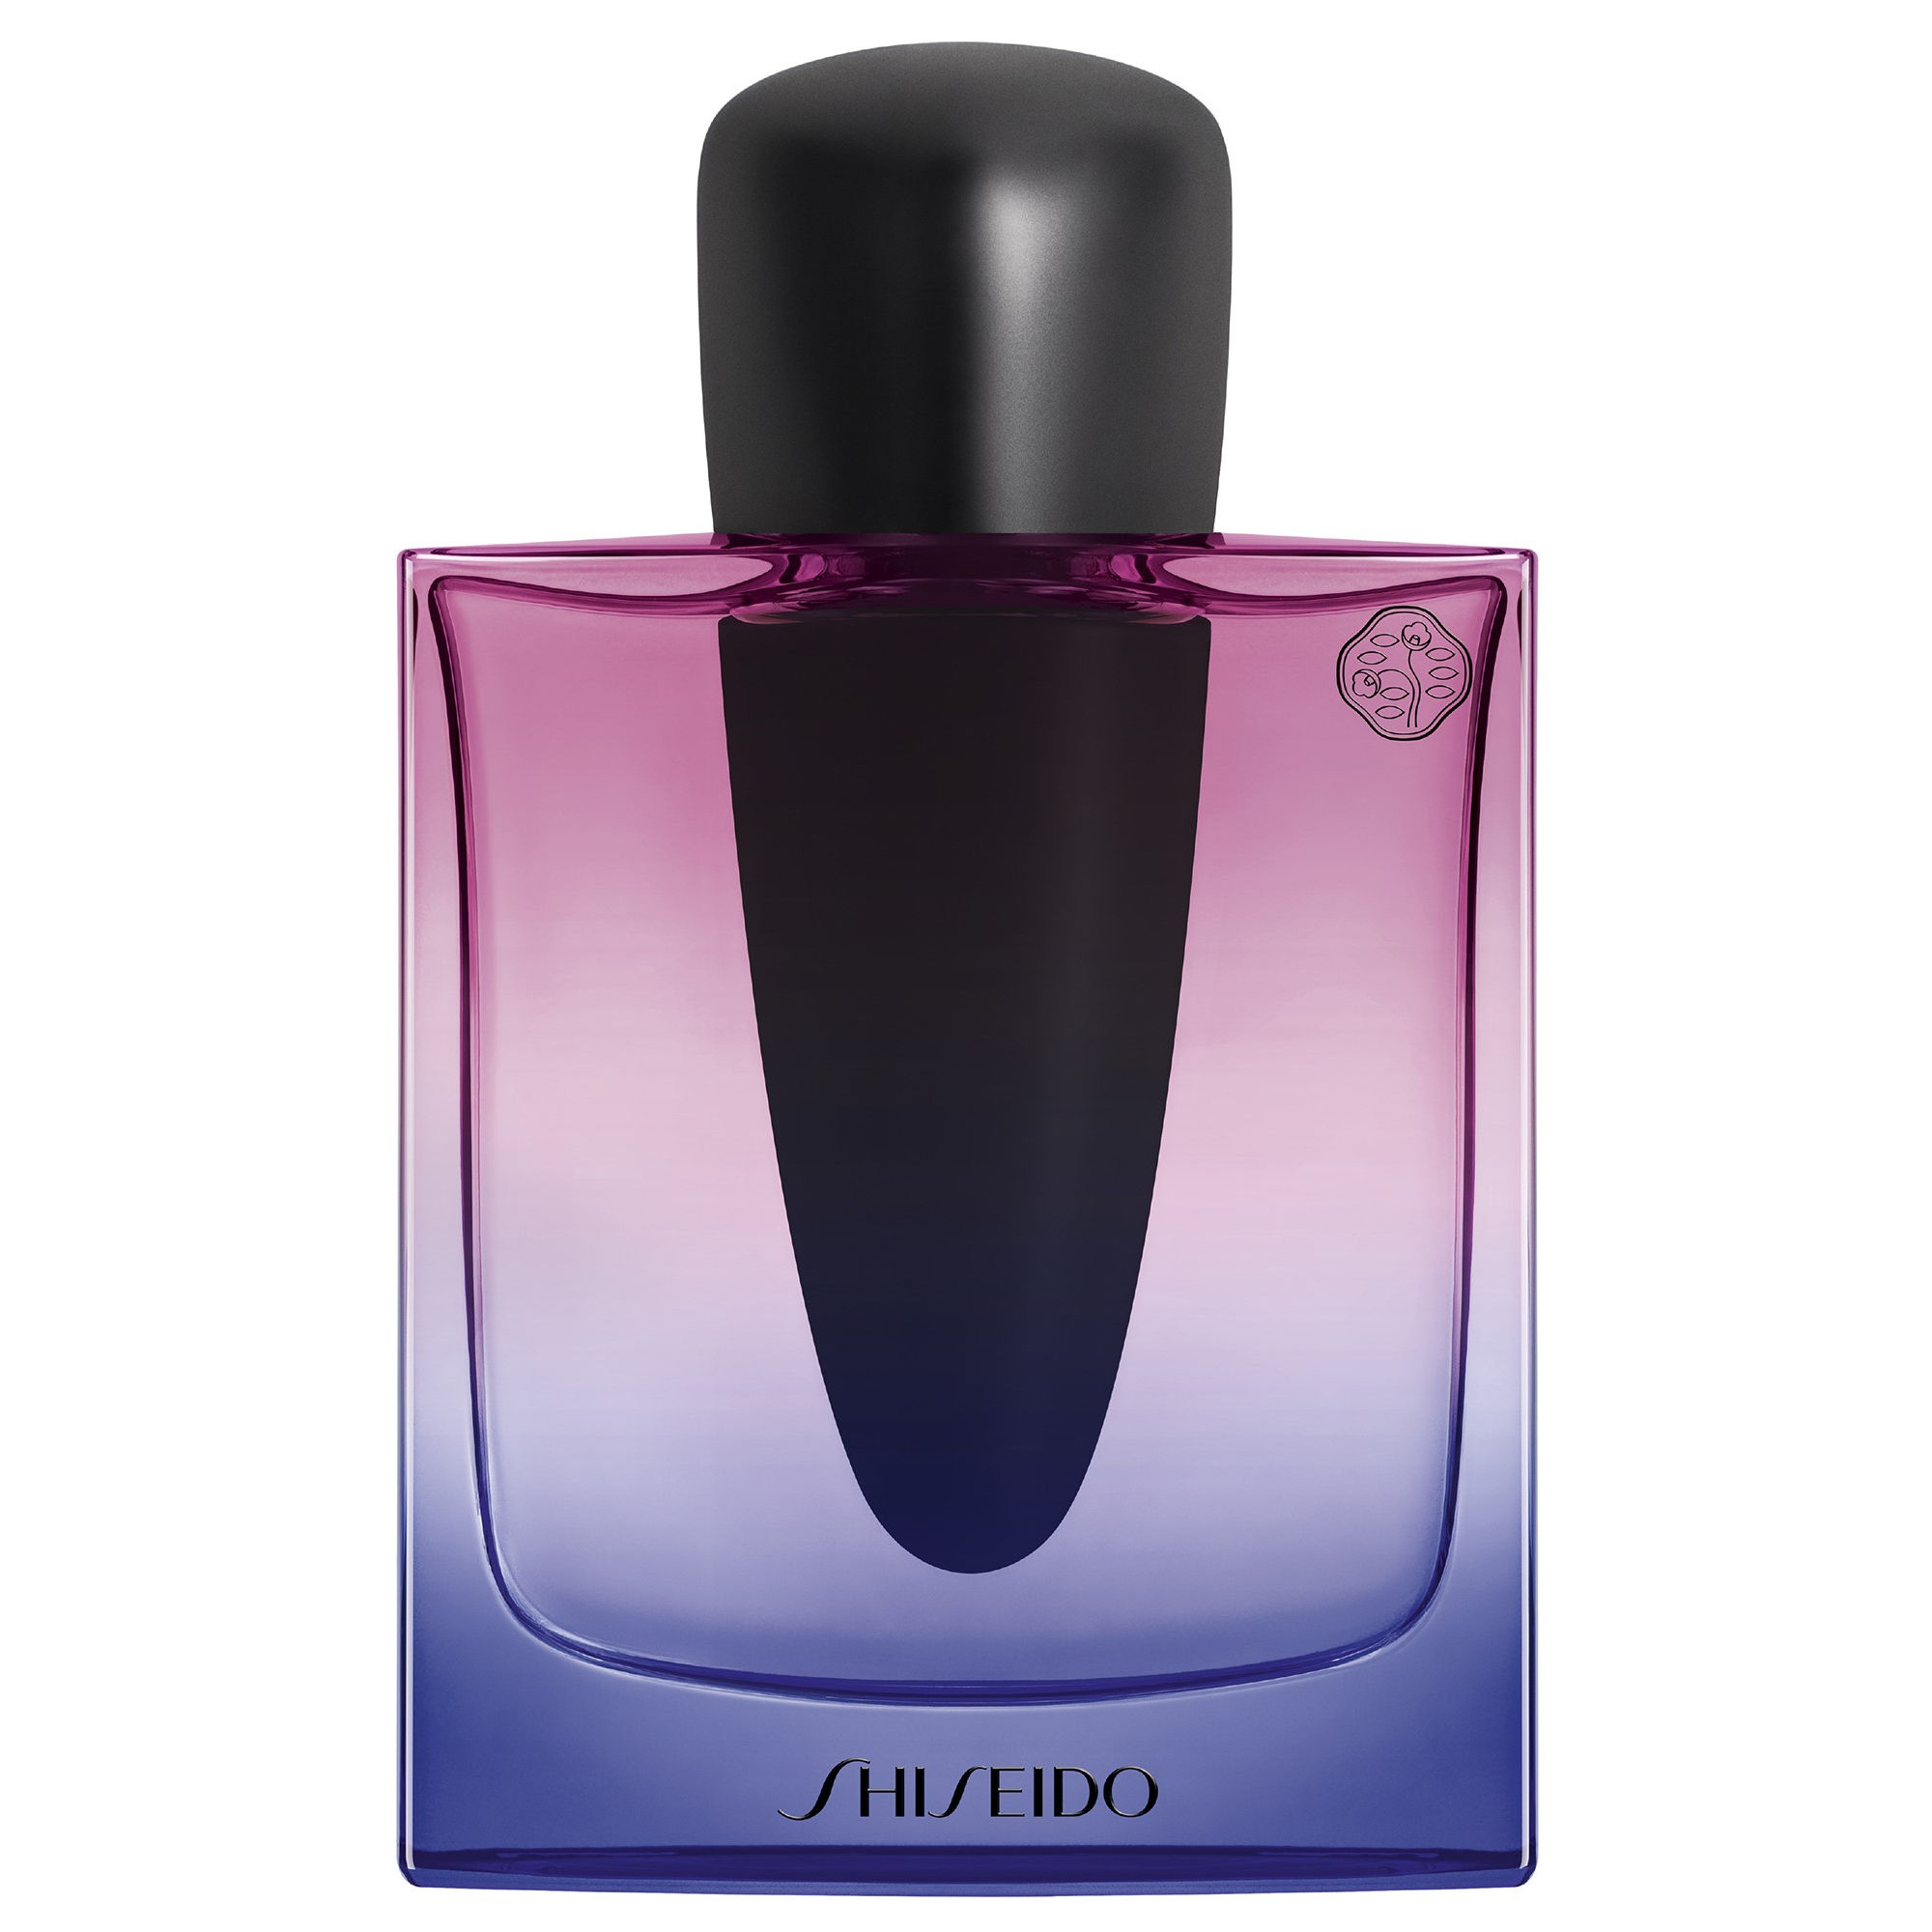 Shiseido Ginza Night Eau de parfum spray intense 90 ml